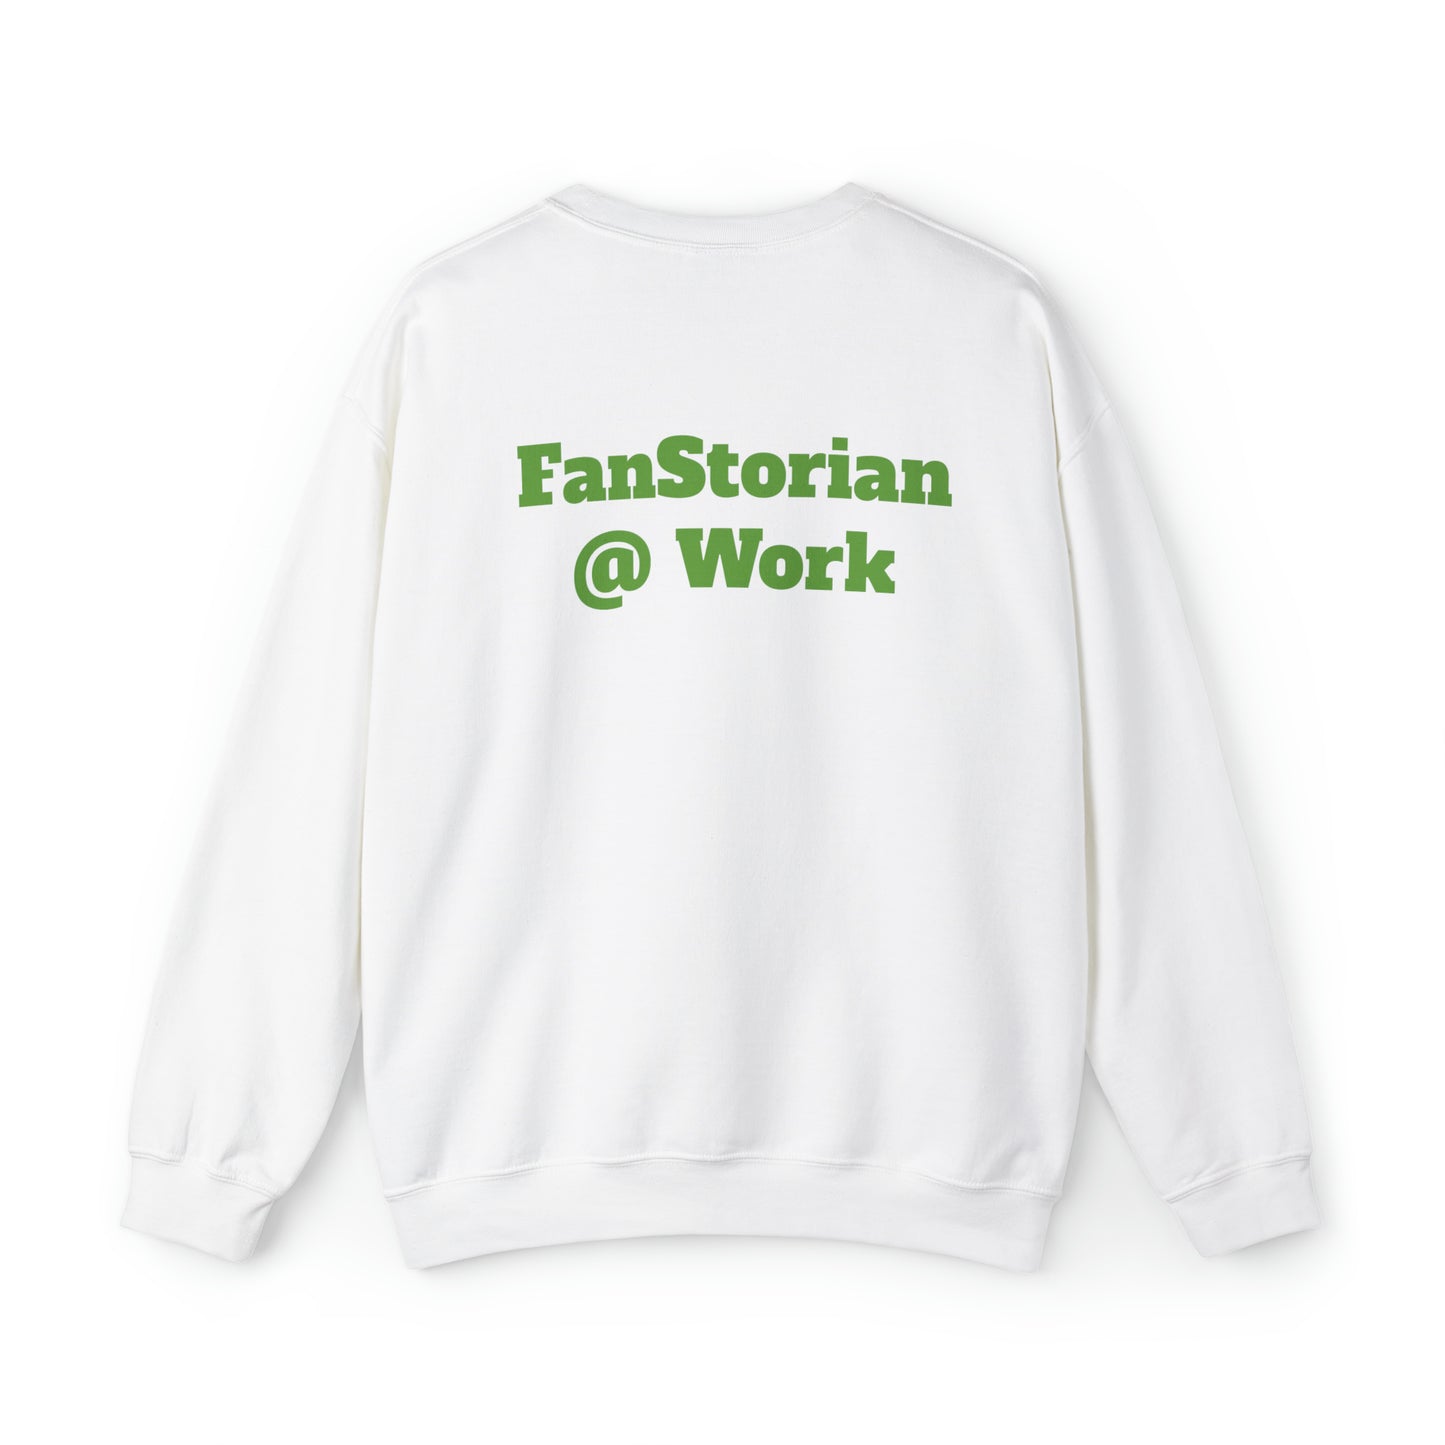 FanStorian @ Work. Crewneck Sweatshirt